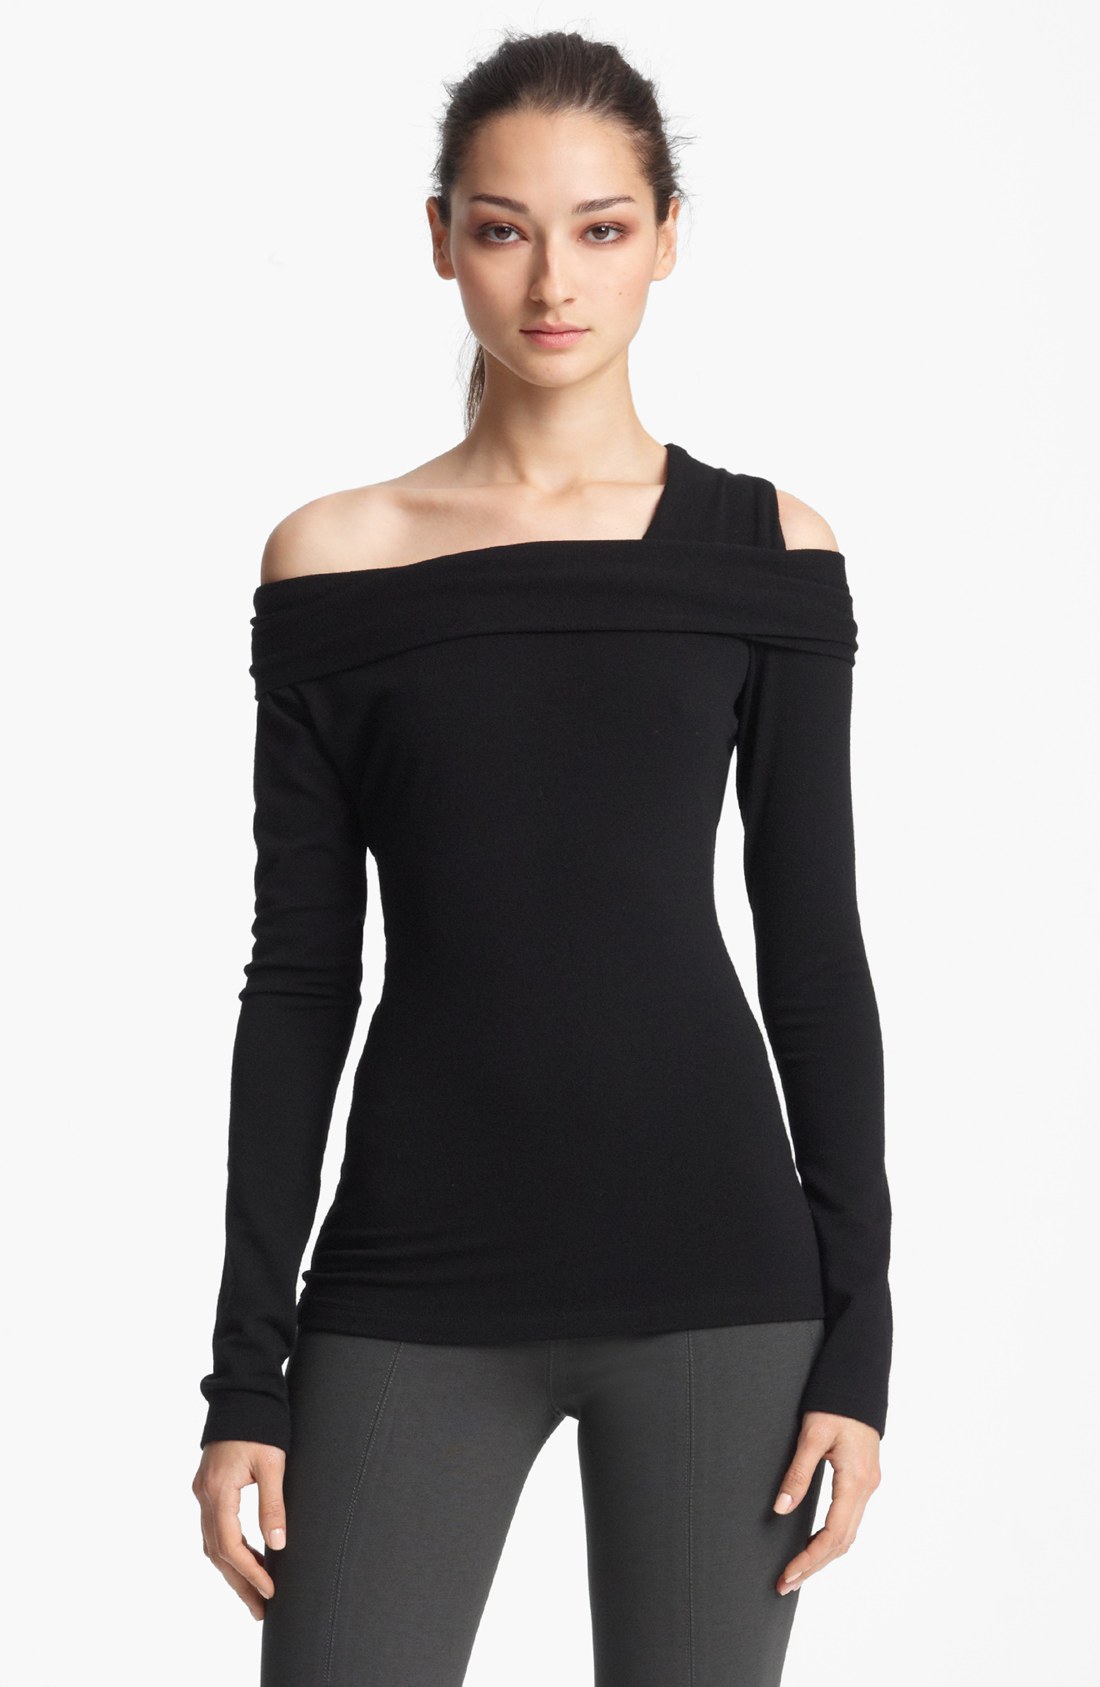 Donna Karan New York Collection Cold Shoulder Top in Black | Lyst